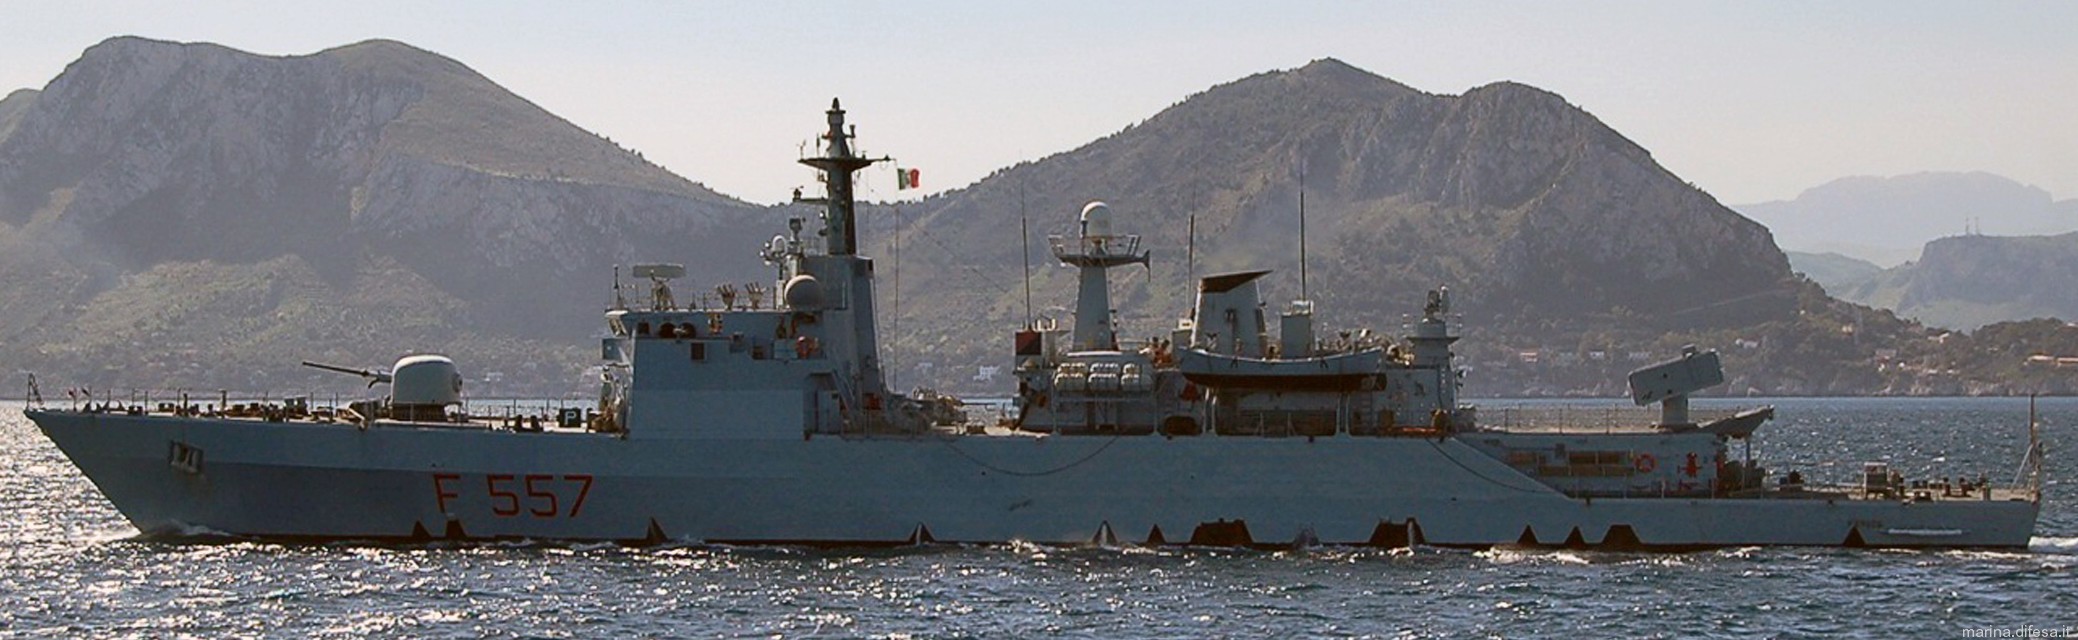 f-557 fenice nave its minerva class corvette italian navy marina militare 03